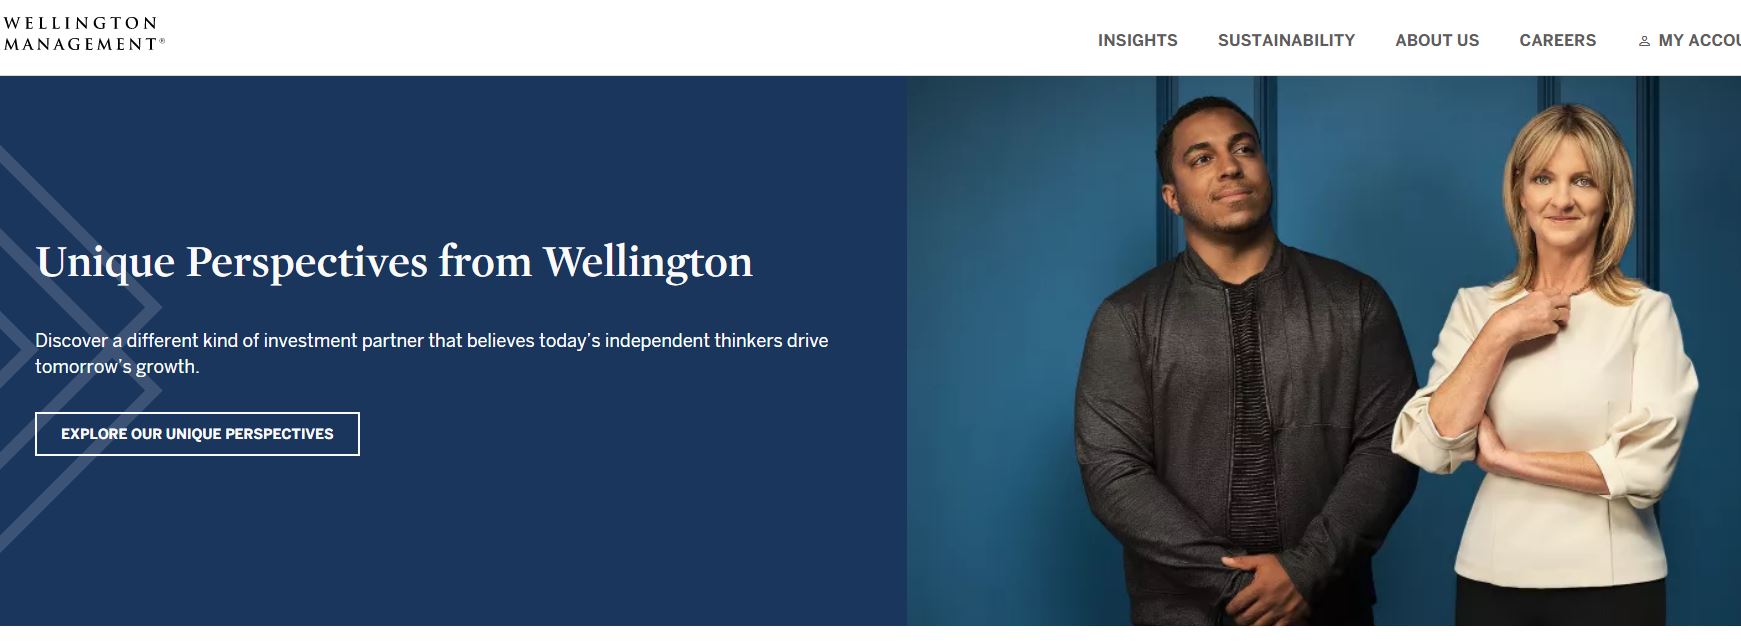 wellington hbcu scholars program homepage